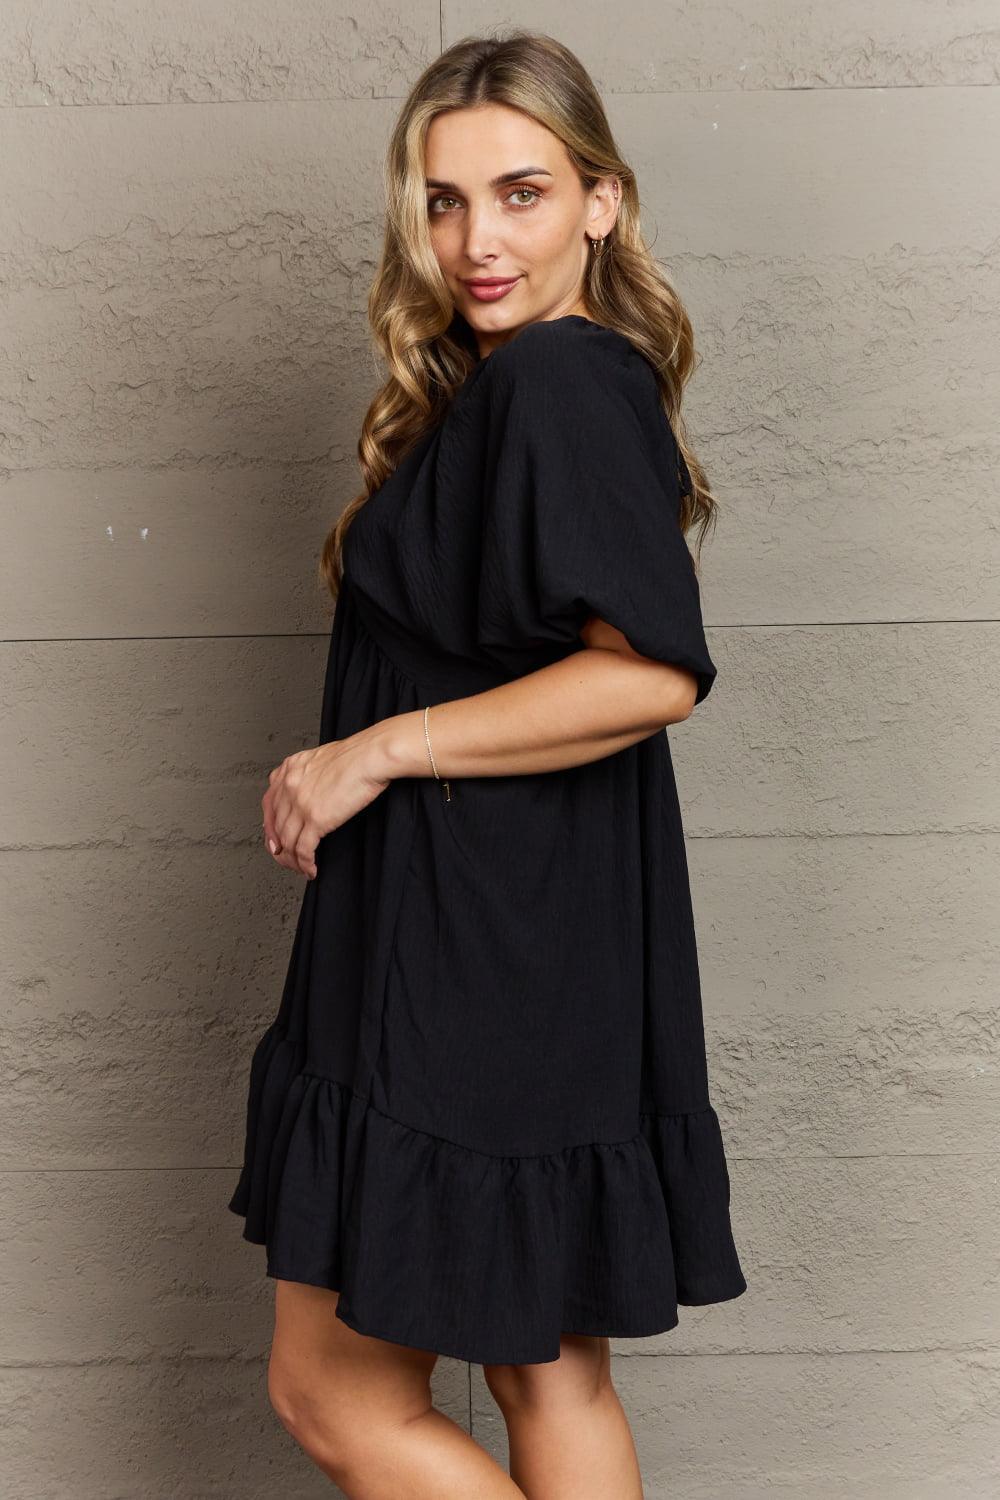 Utterly Stylish Short Sleeve Black Mini Dress - MXSTUDIO.COM